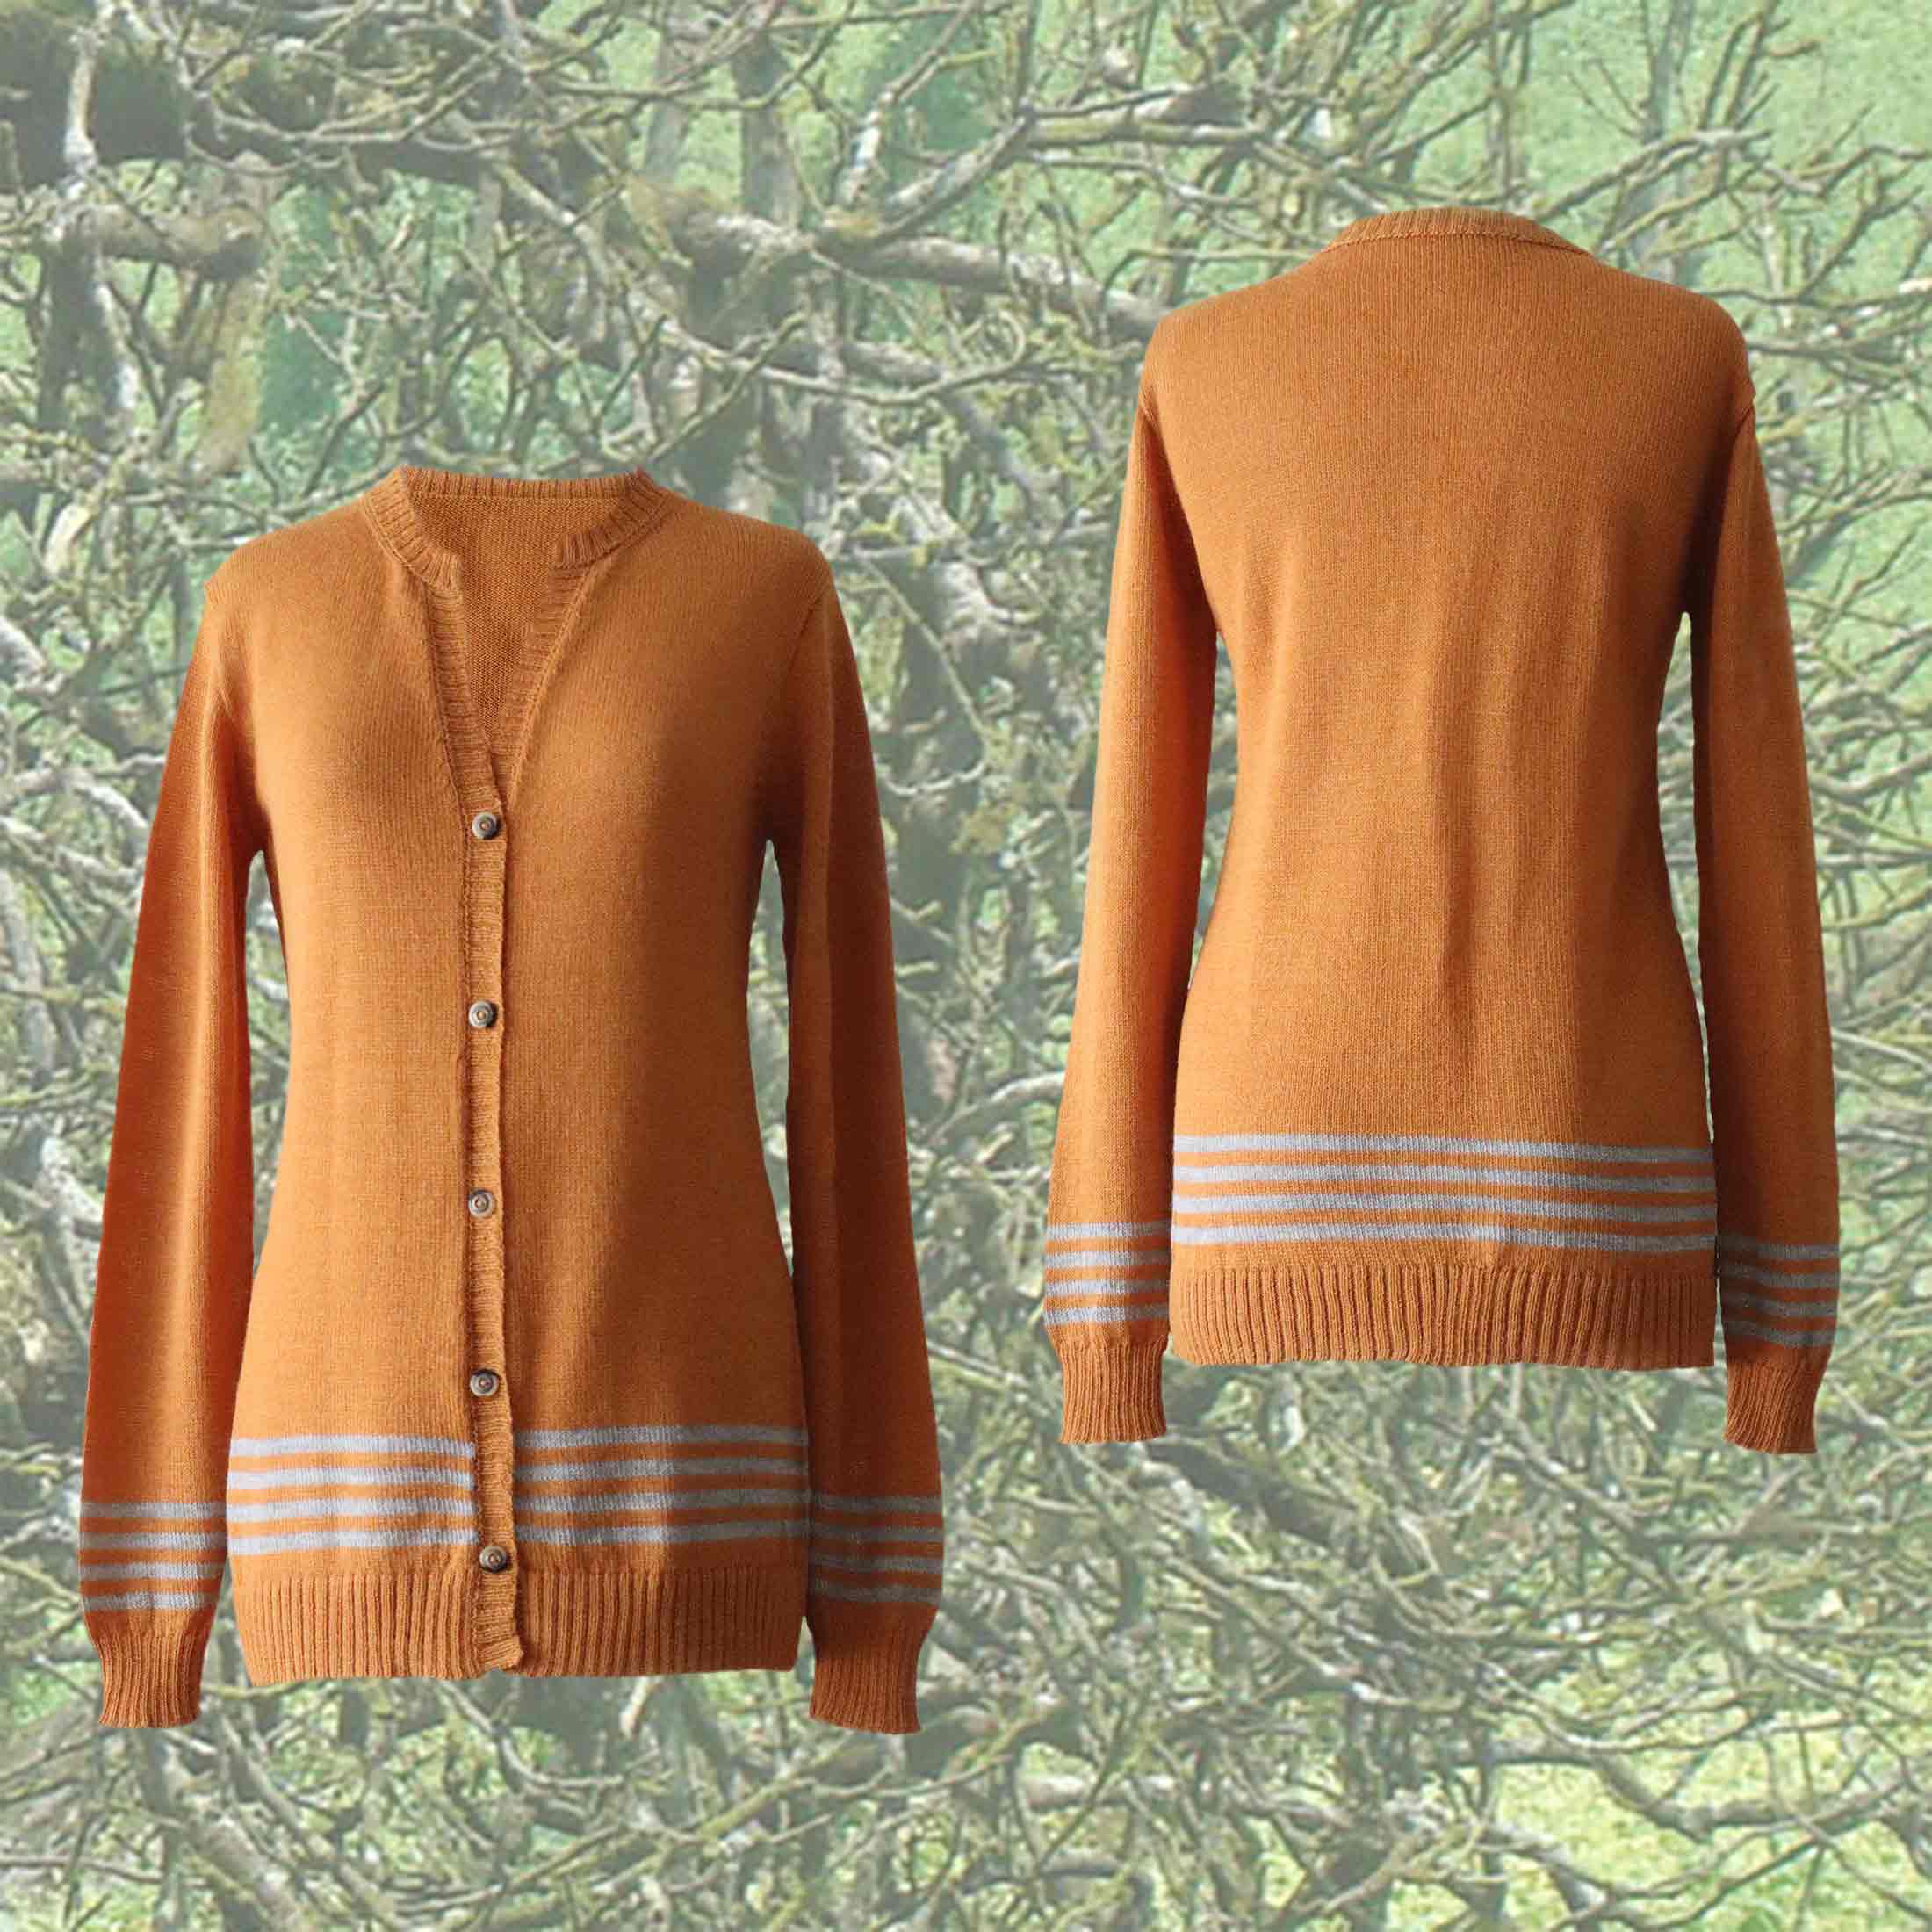 PFL - Knitwear Cardigan baby alpaca 100%, button closure, vest baby alpaca with a mix of crew and v-neck color princeton orange.